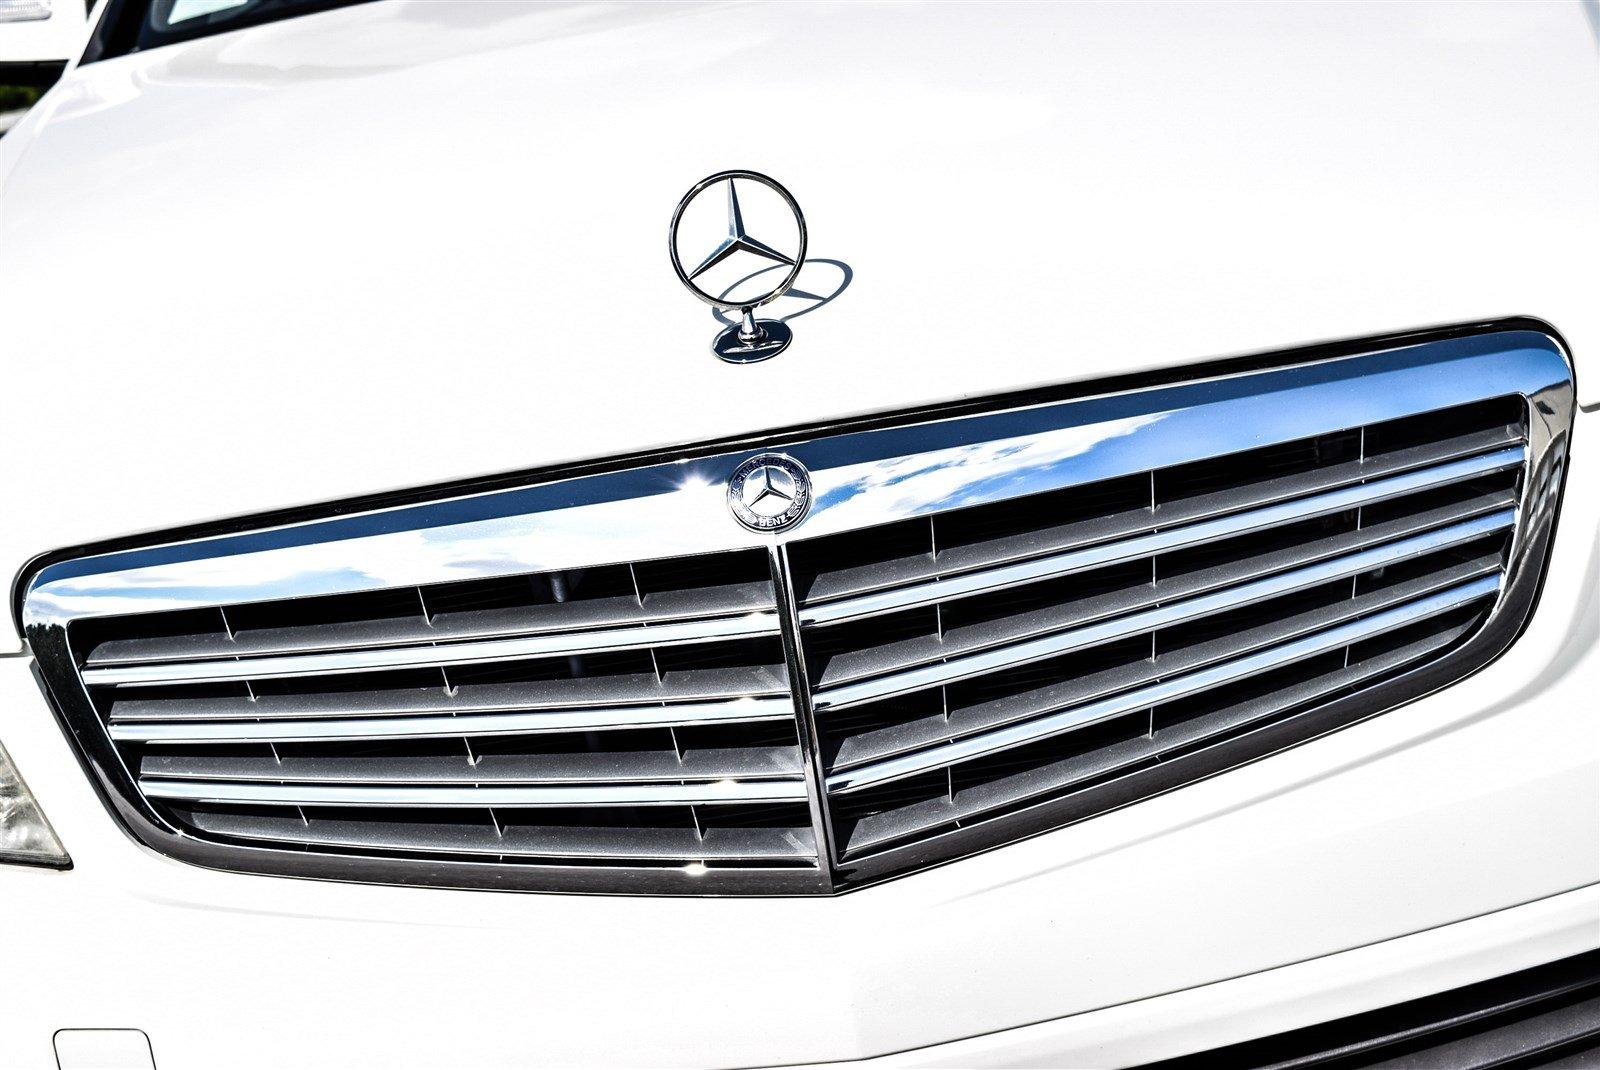 Used 2008 Mercedes-Benz C-Class 3.0L Luxury for sale Sold at Gravity Autos Marietta in Marietta GA 30060 8